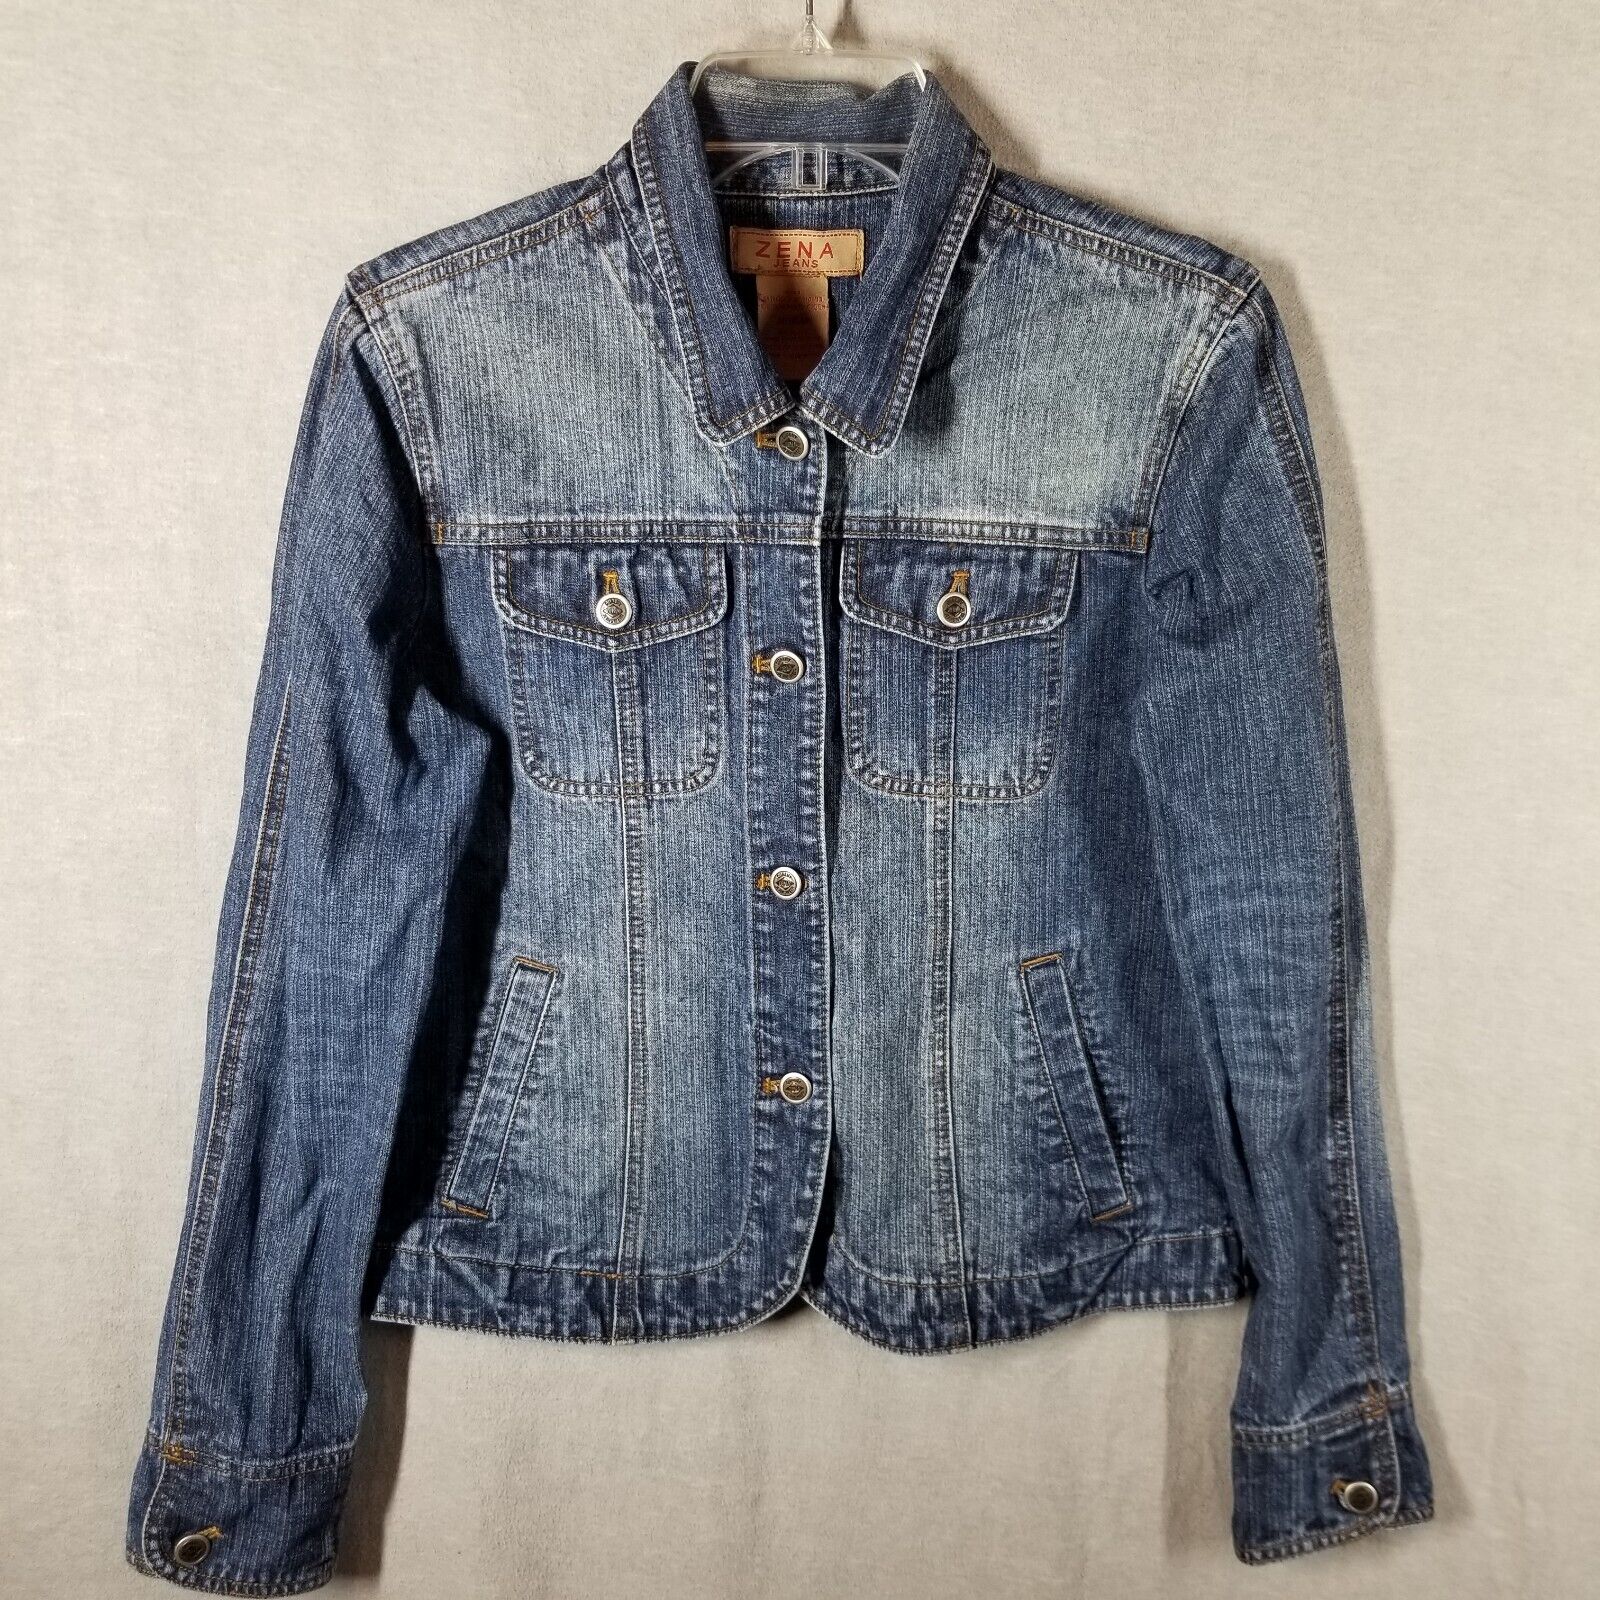 Vintage Zena Jean Jacket Women’s Medium Denim Trucker Jacket Distressed Cotton